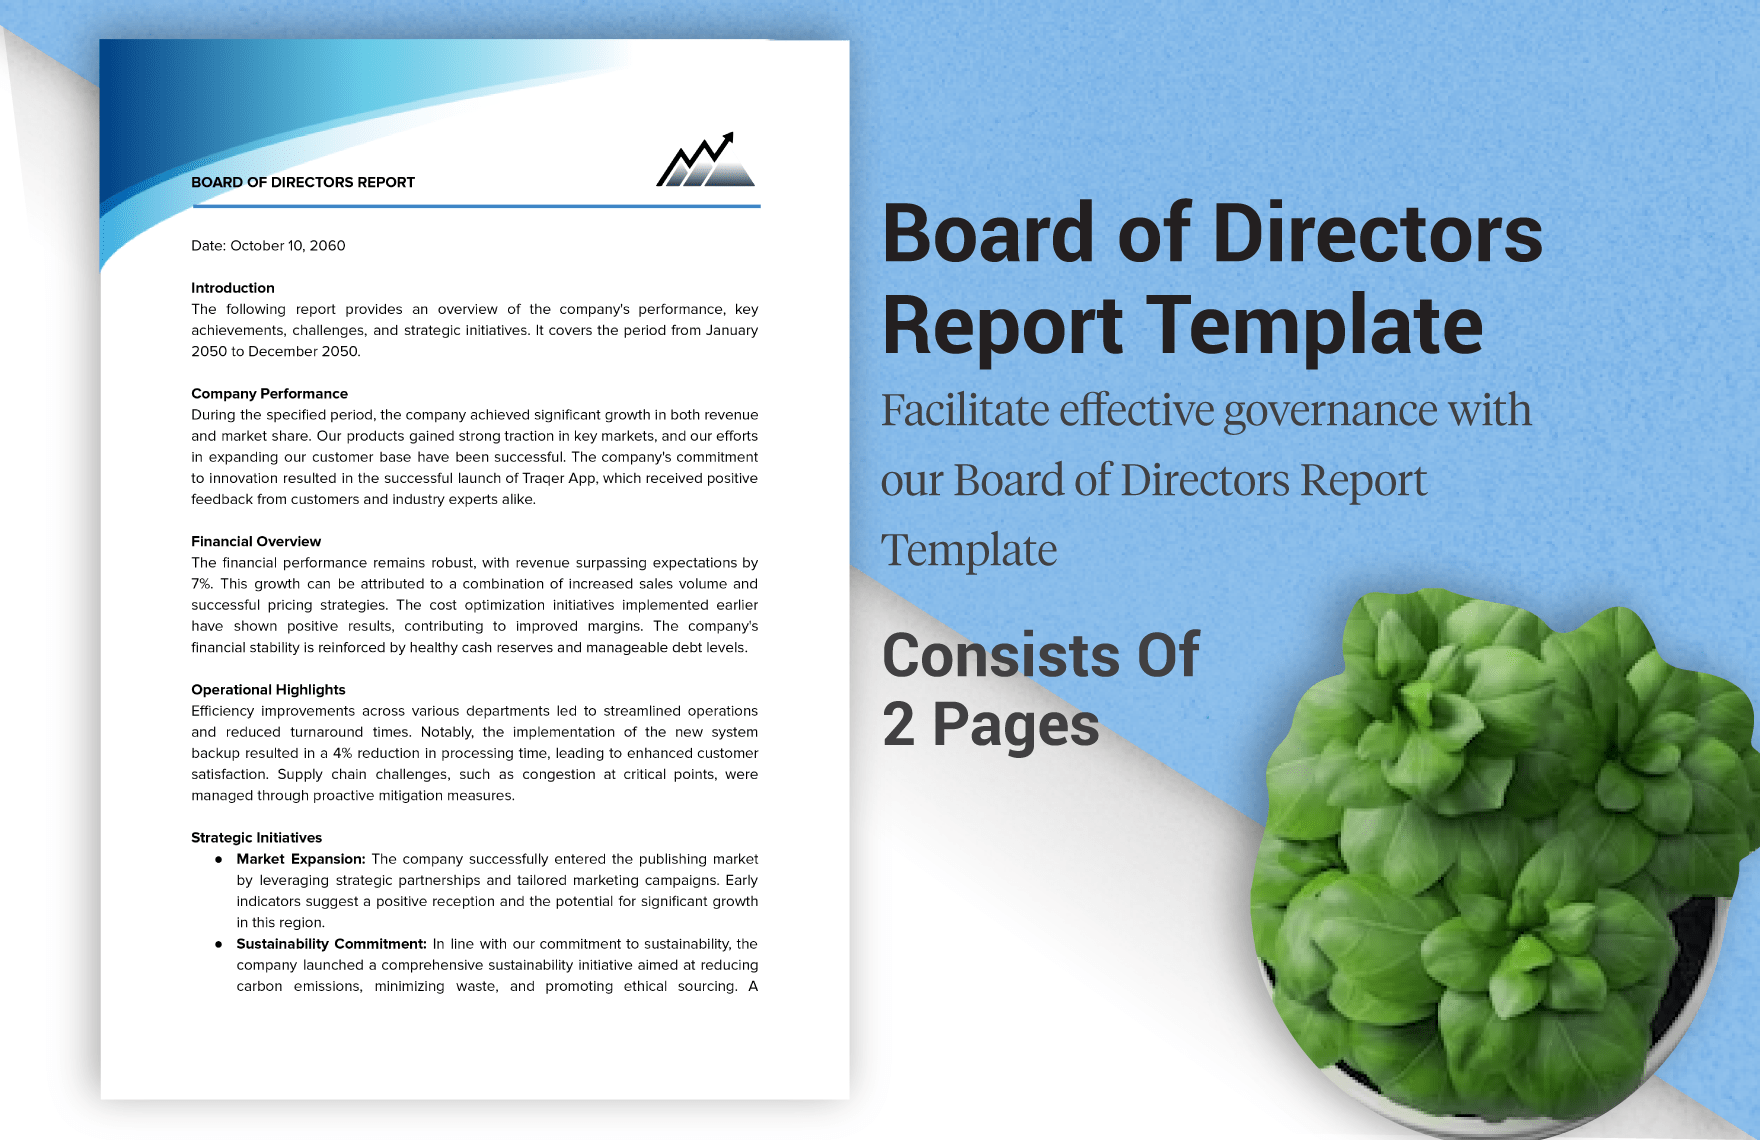 Board of Directors Report Template